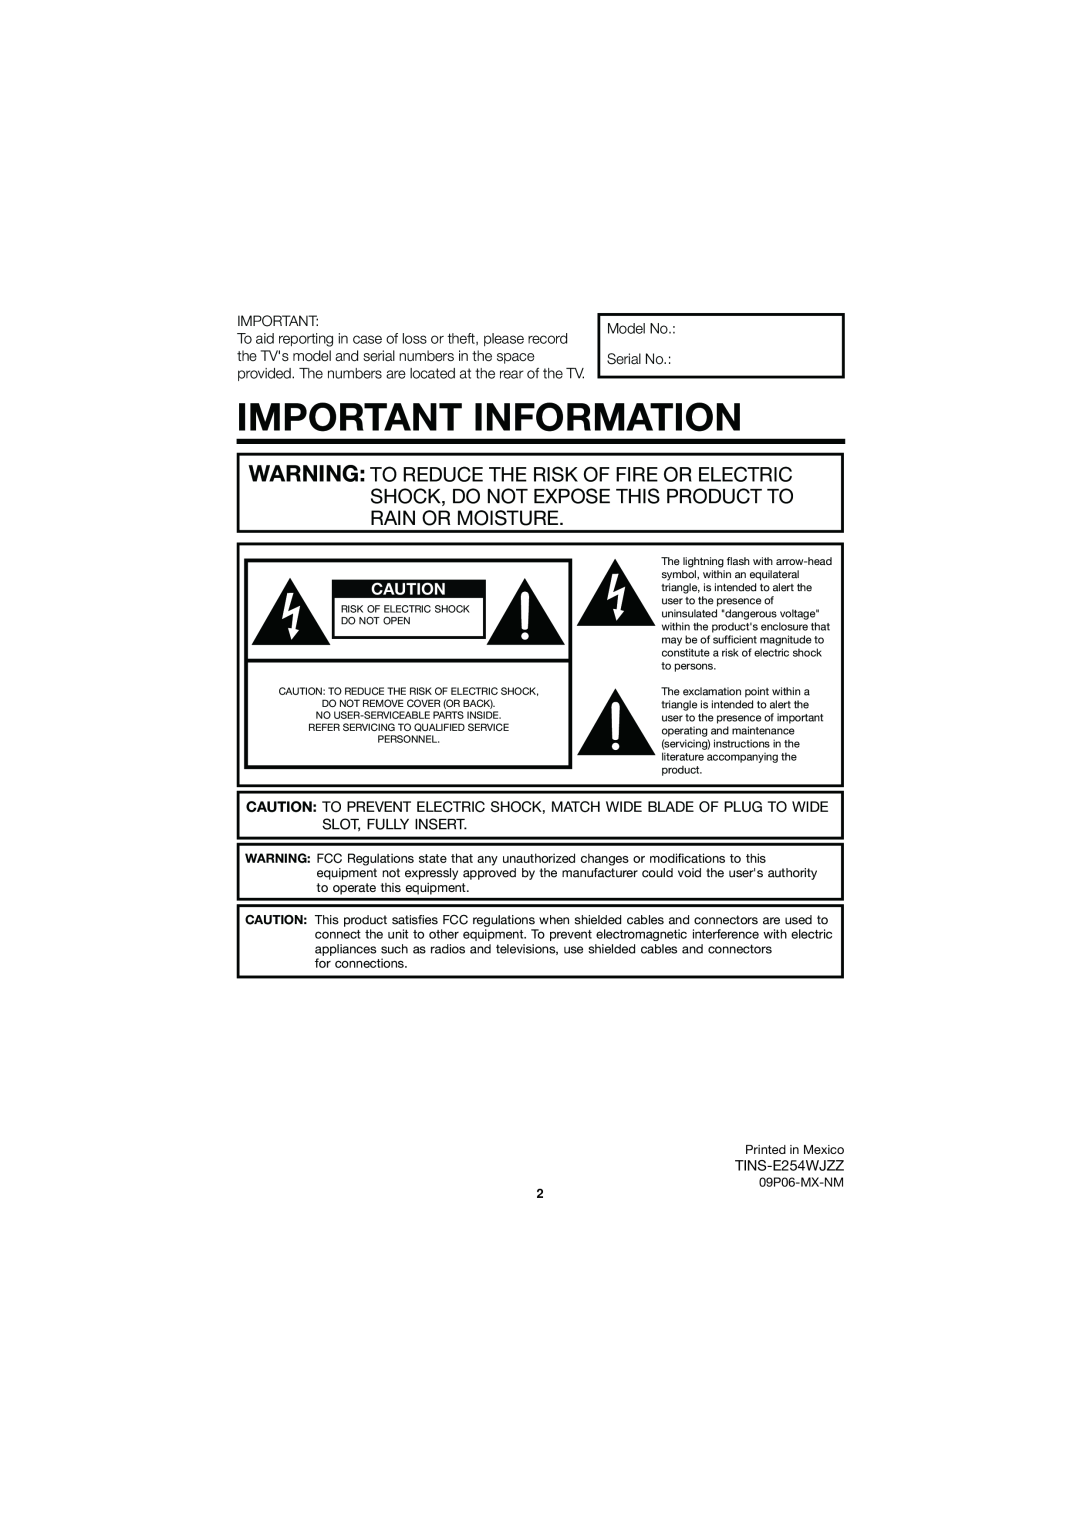 Sharp LC32D47UT operation manual Important Information, Model No Serial No, TINS-E254WJZZ 